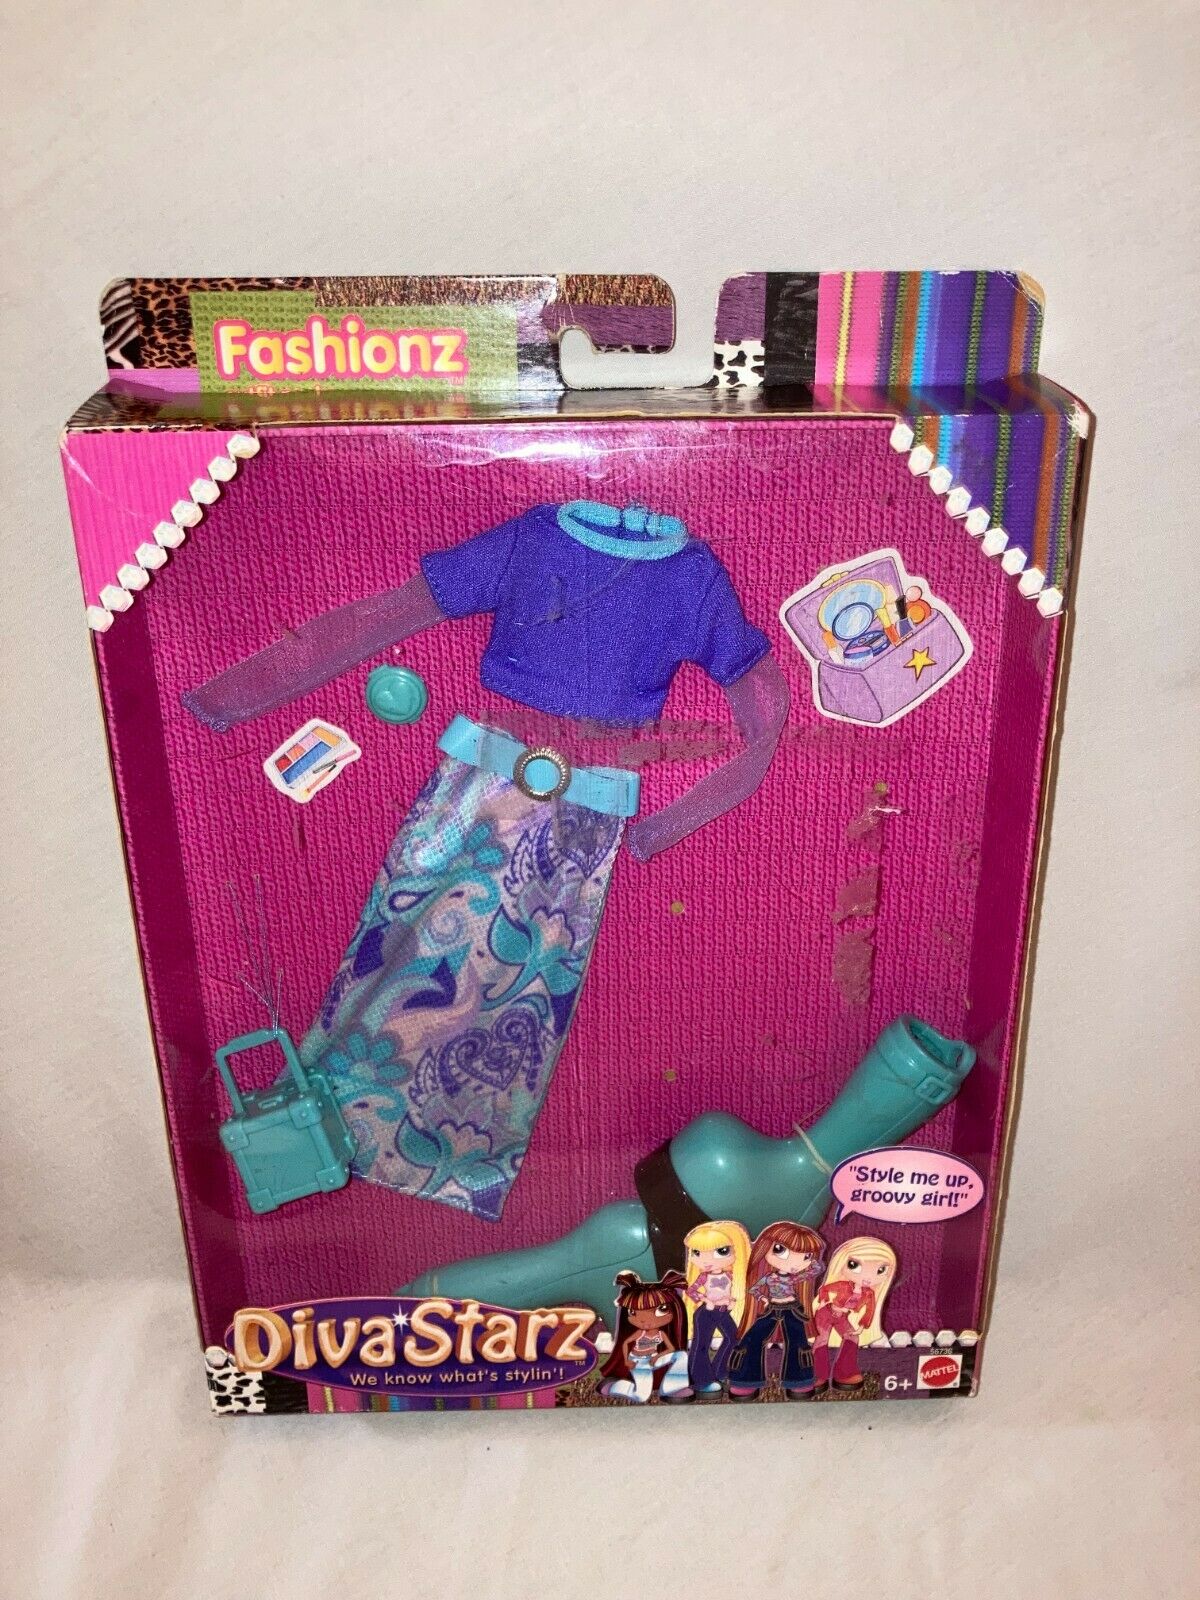 Diva Starz Fashionz, #56736, 2002